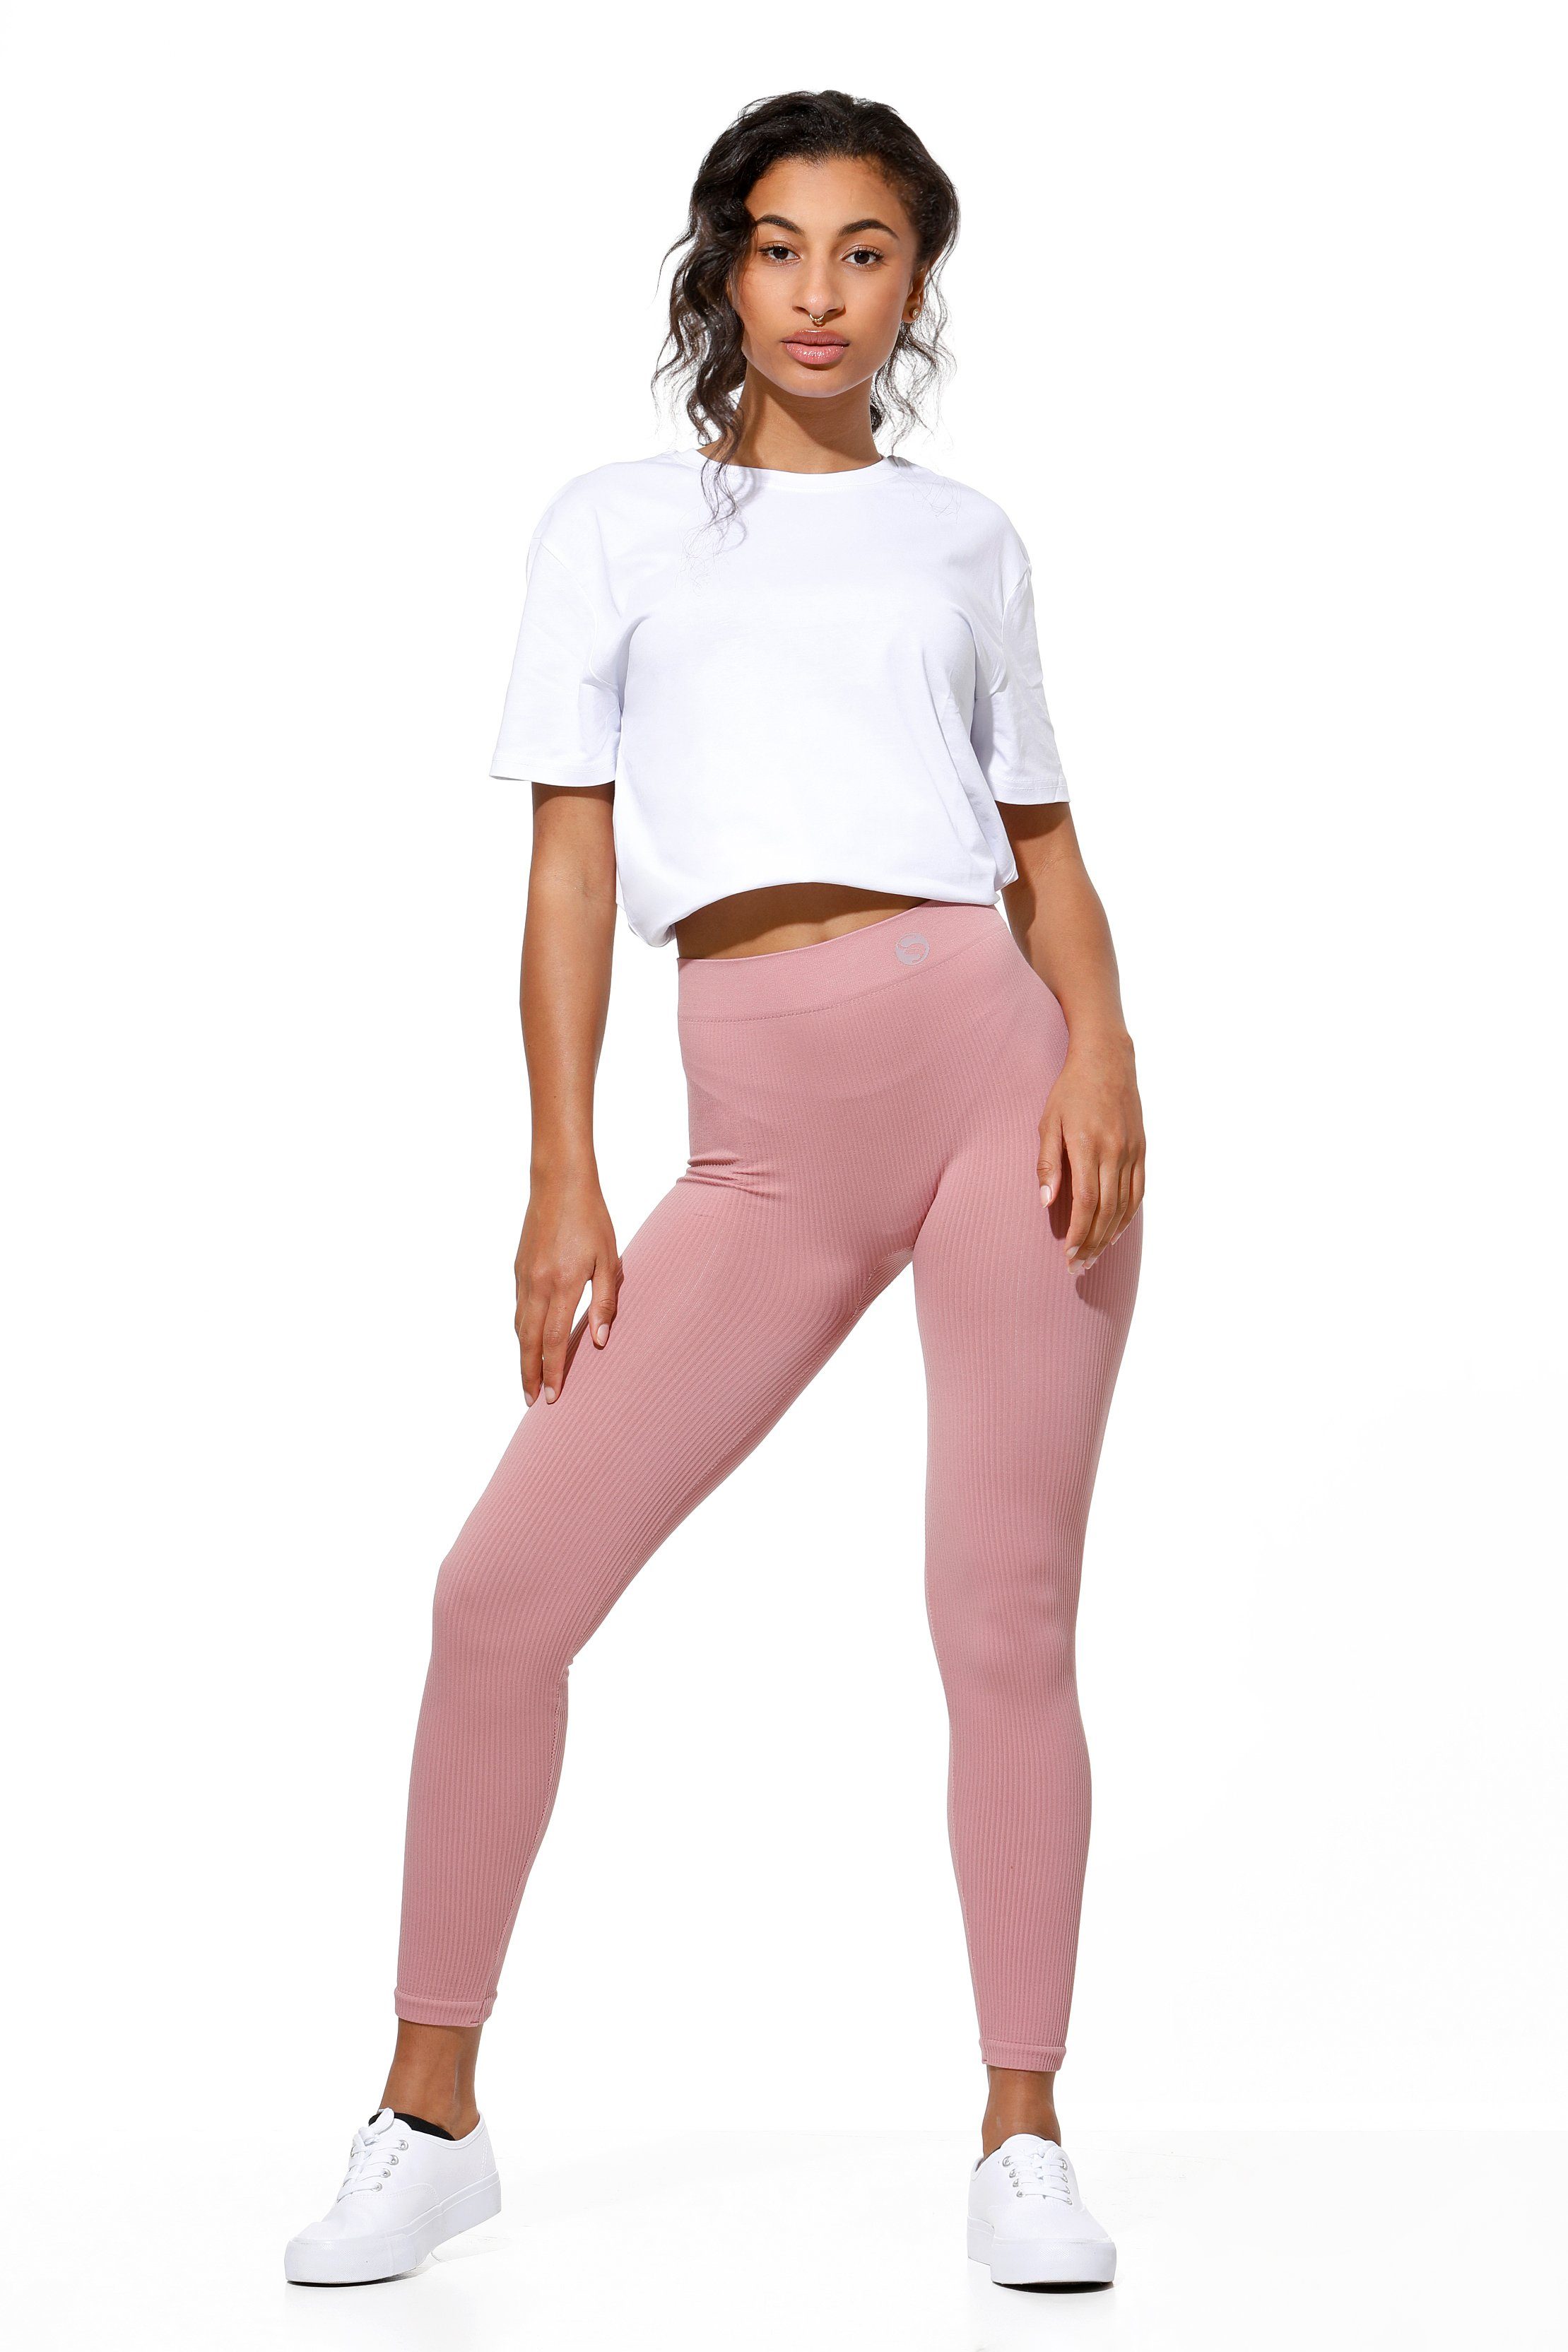 Jogginghose für Damen, Stark Zwickelnaht Leggings elastischem Soul® Ribbed Fitness-Leggings, mit Bund Leggings und